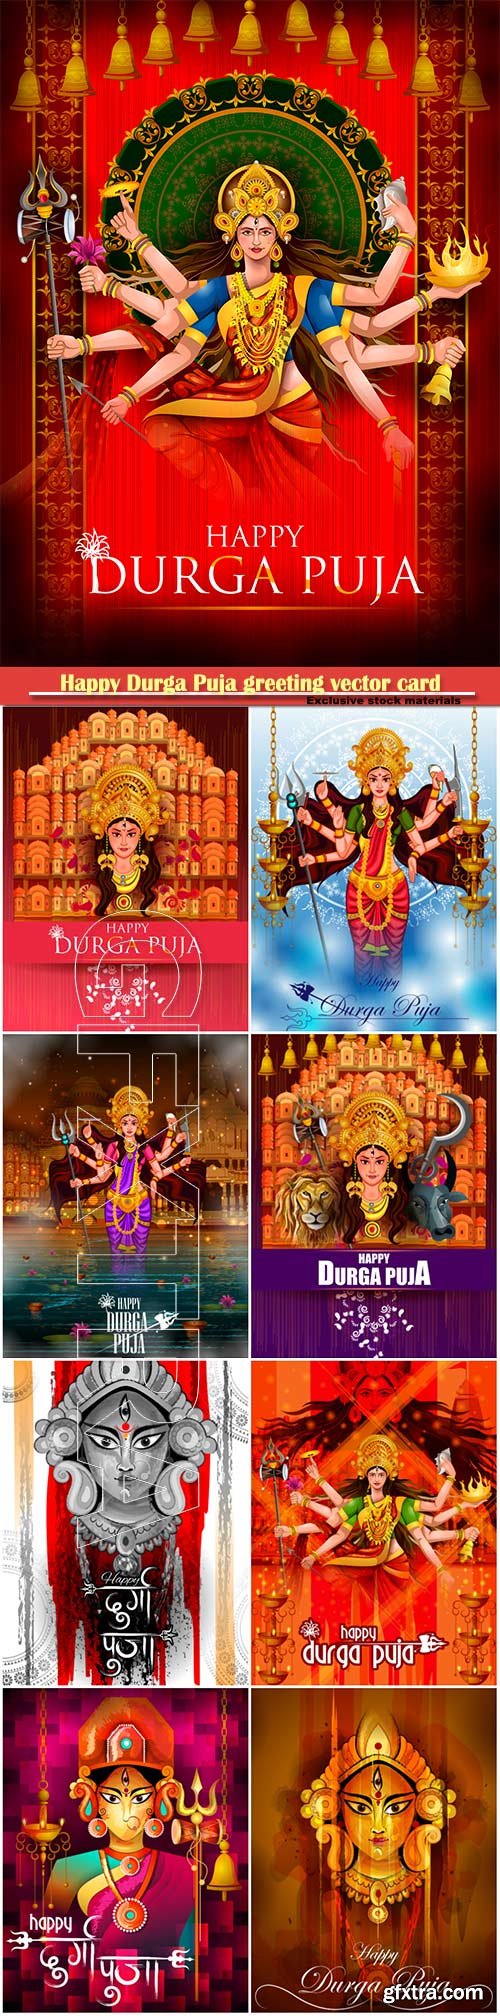 Happy Durga Puja greeting vector card